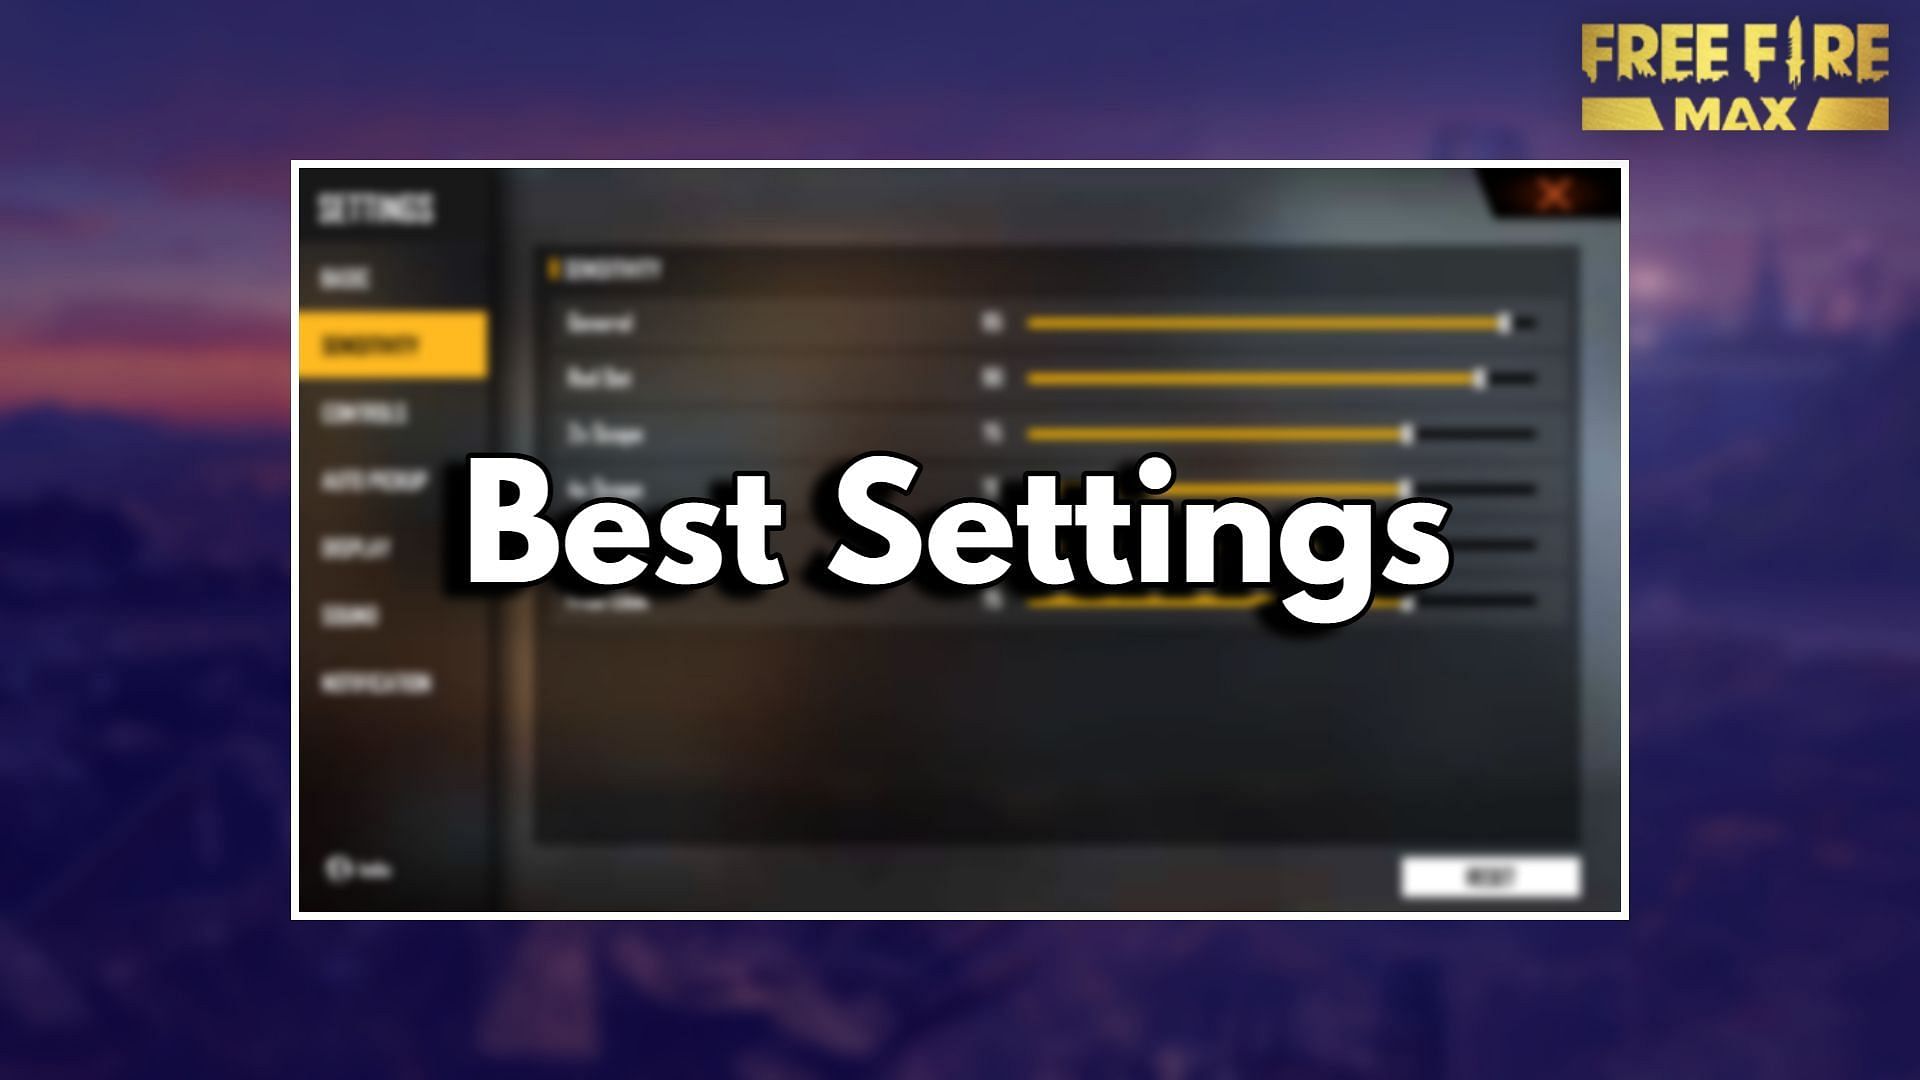 Best settings in Free Fire MAX (Image via Garena)